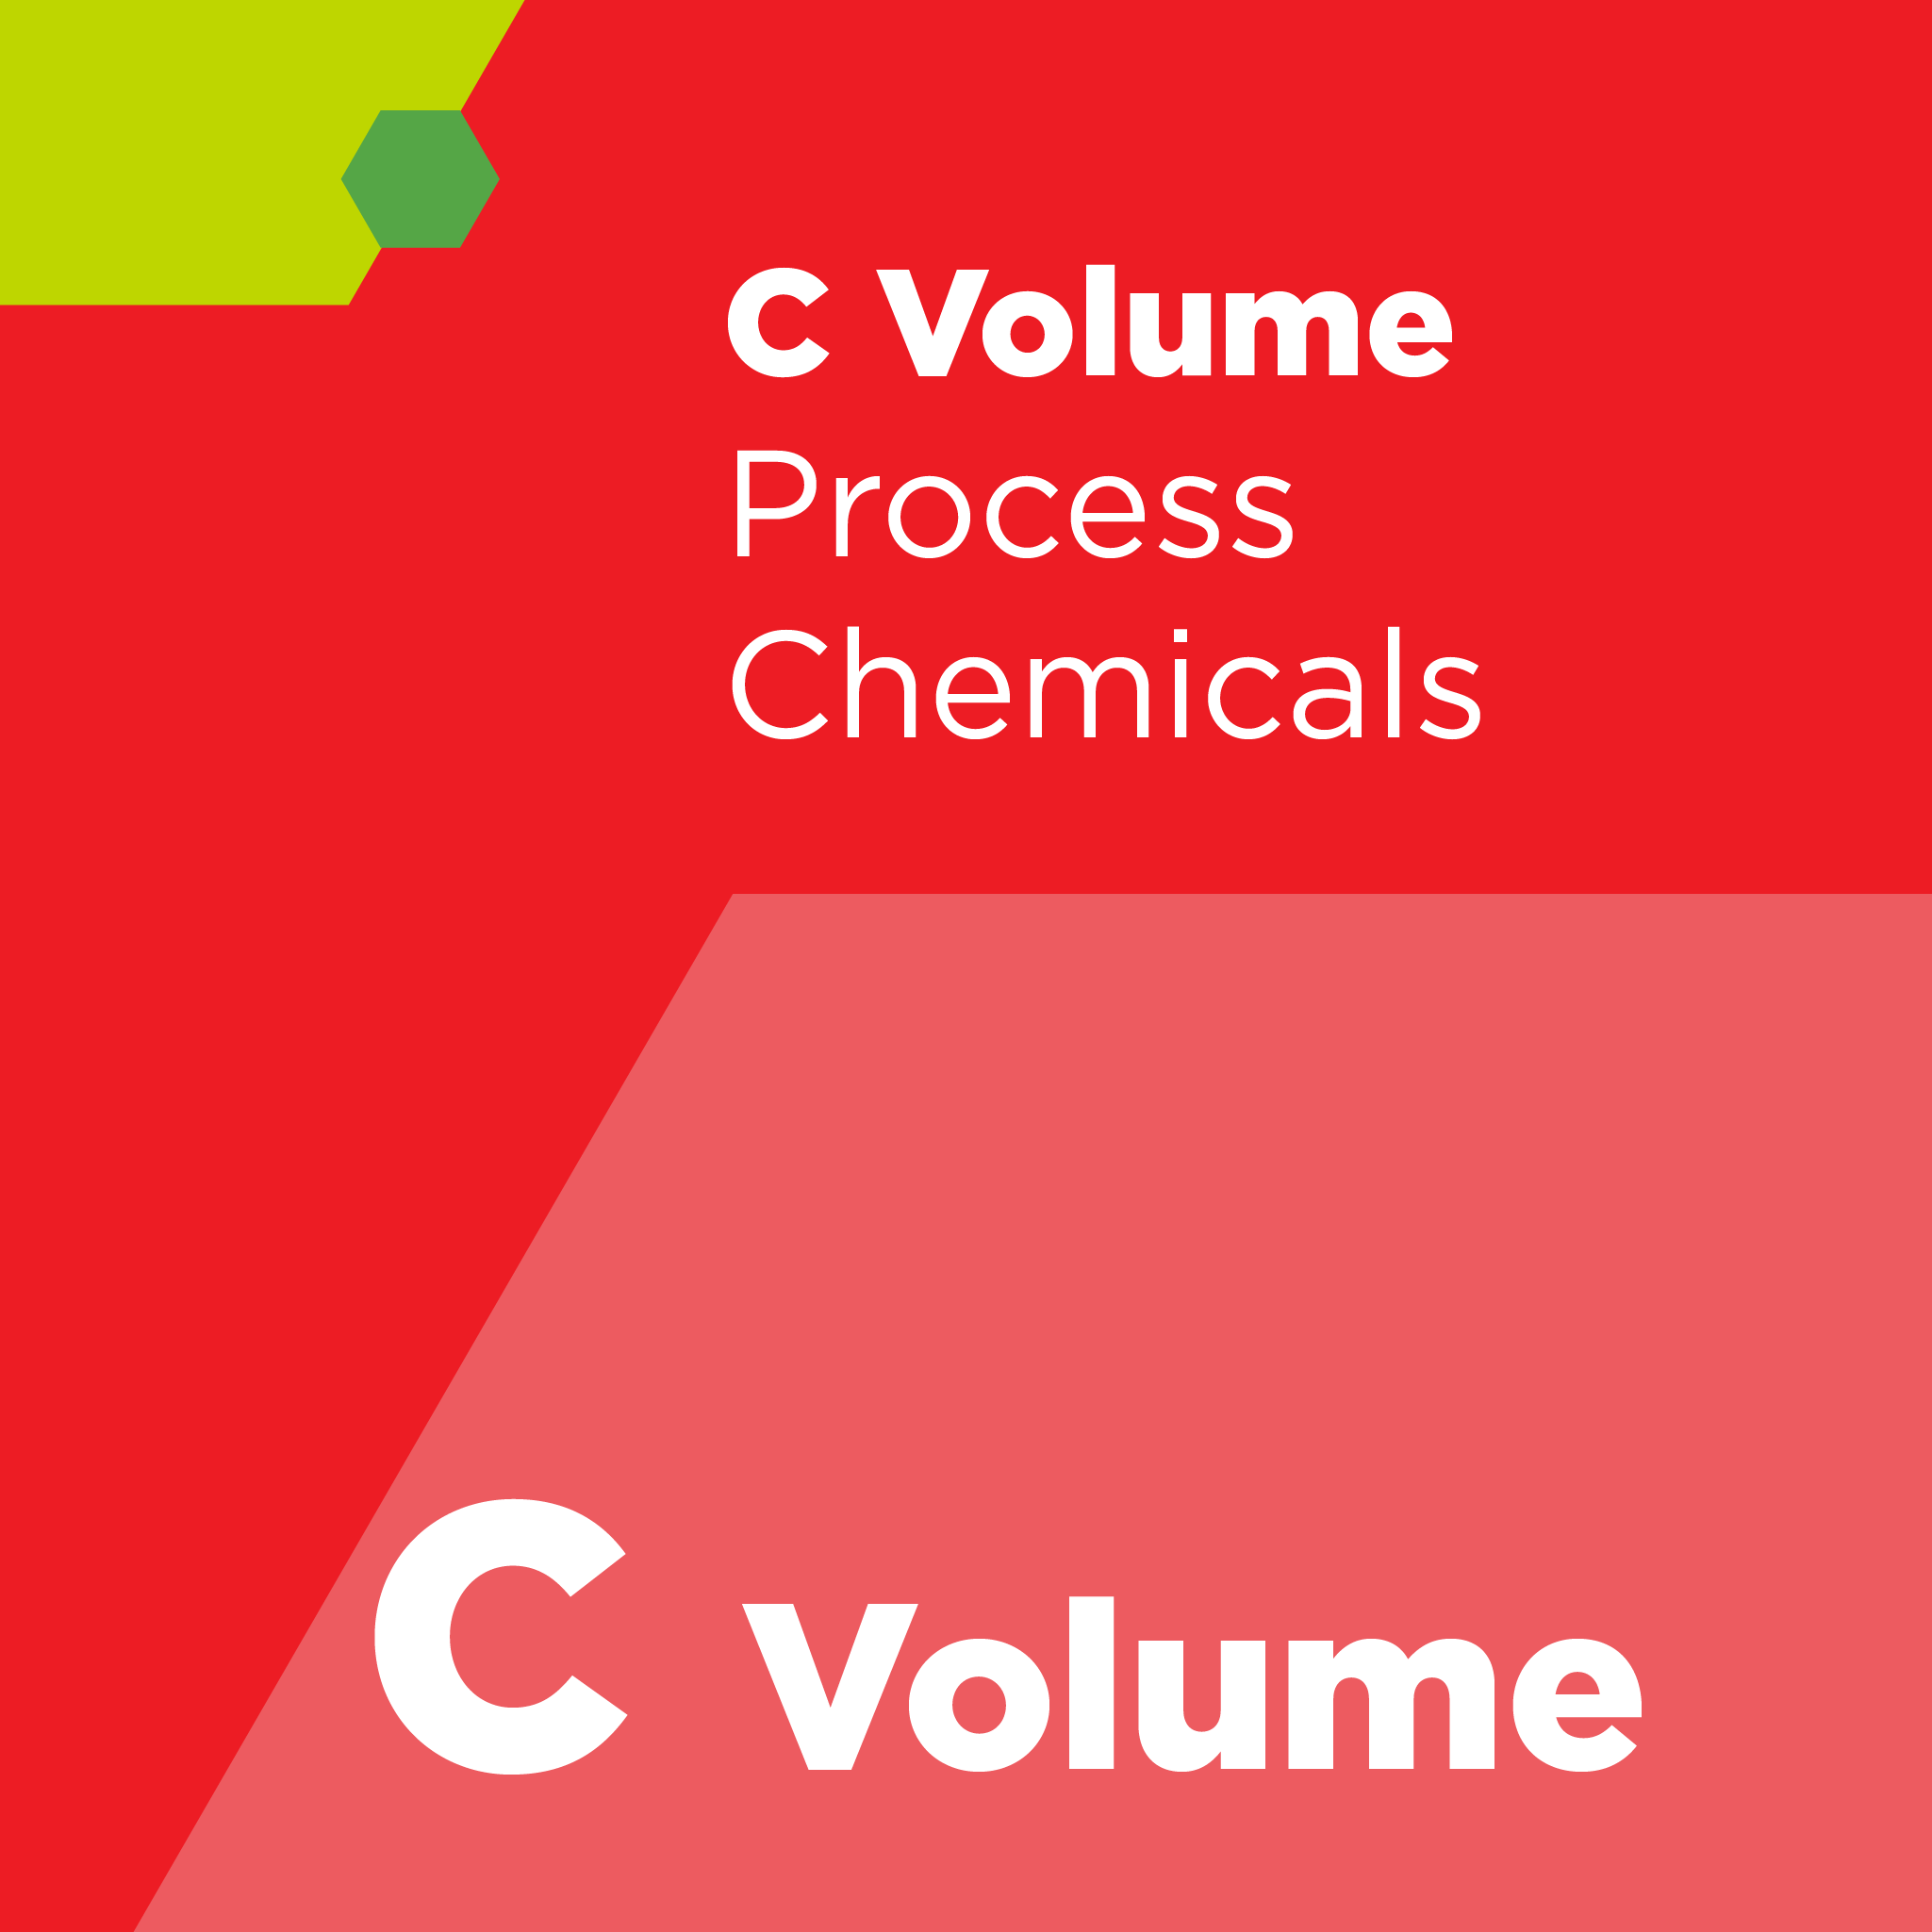 C00100 - SEMI C1 - 液体化学薬品の分析のためのガイド